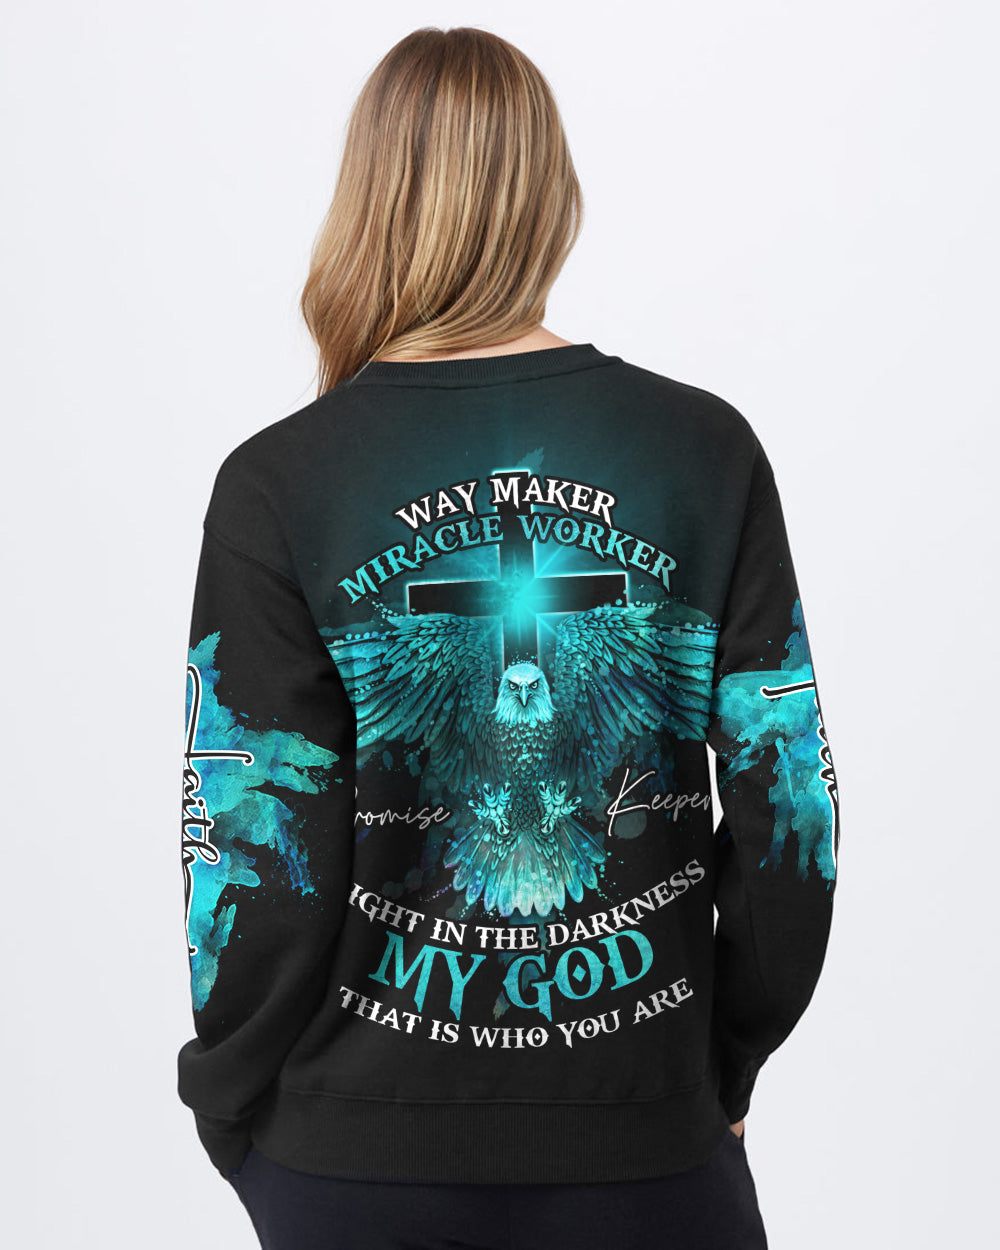 Way Maker Miracle Worker Teal Eagle Cross Women's Christian Sweatshirt